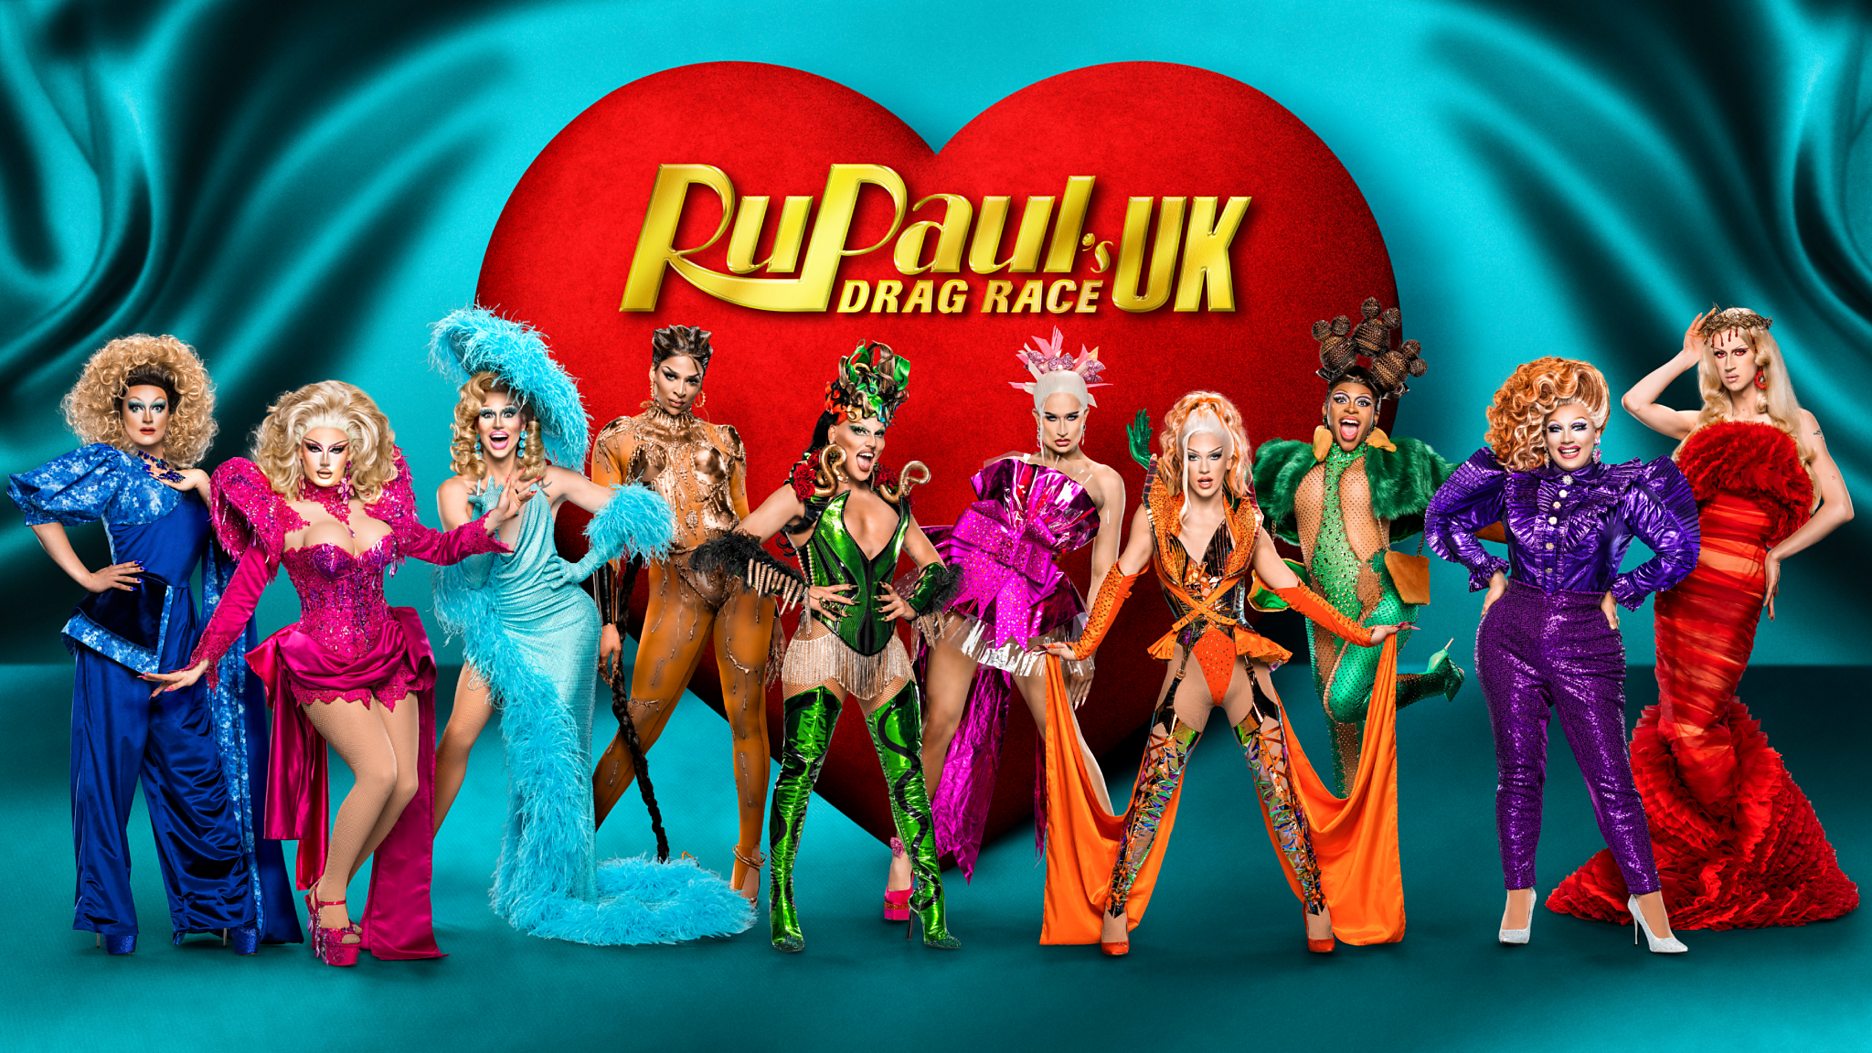 RuPaul’s Drag Race UK returns to BBC Three and BBC iPlayer on 28 September